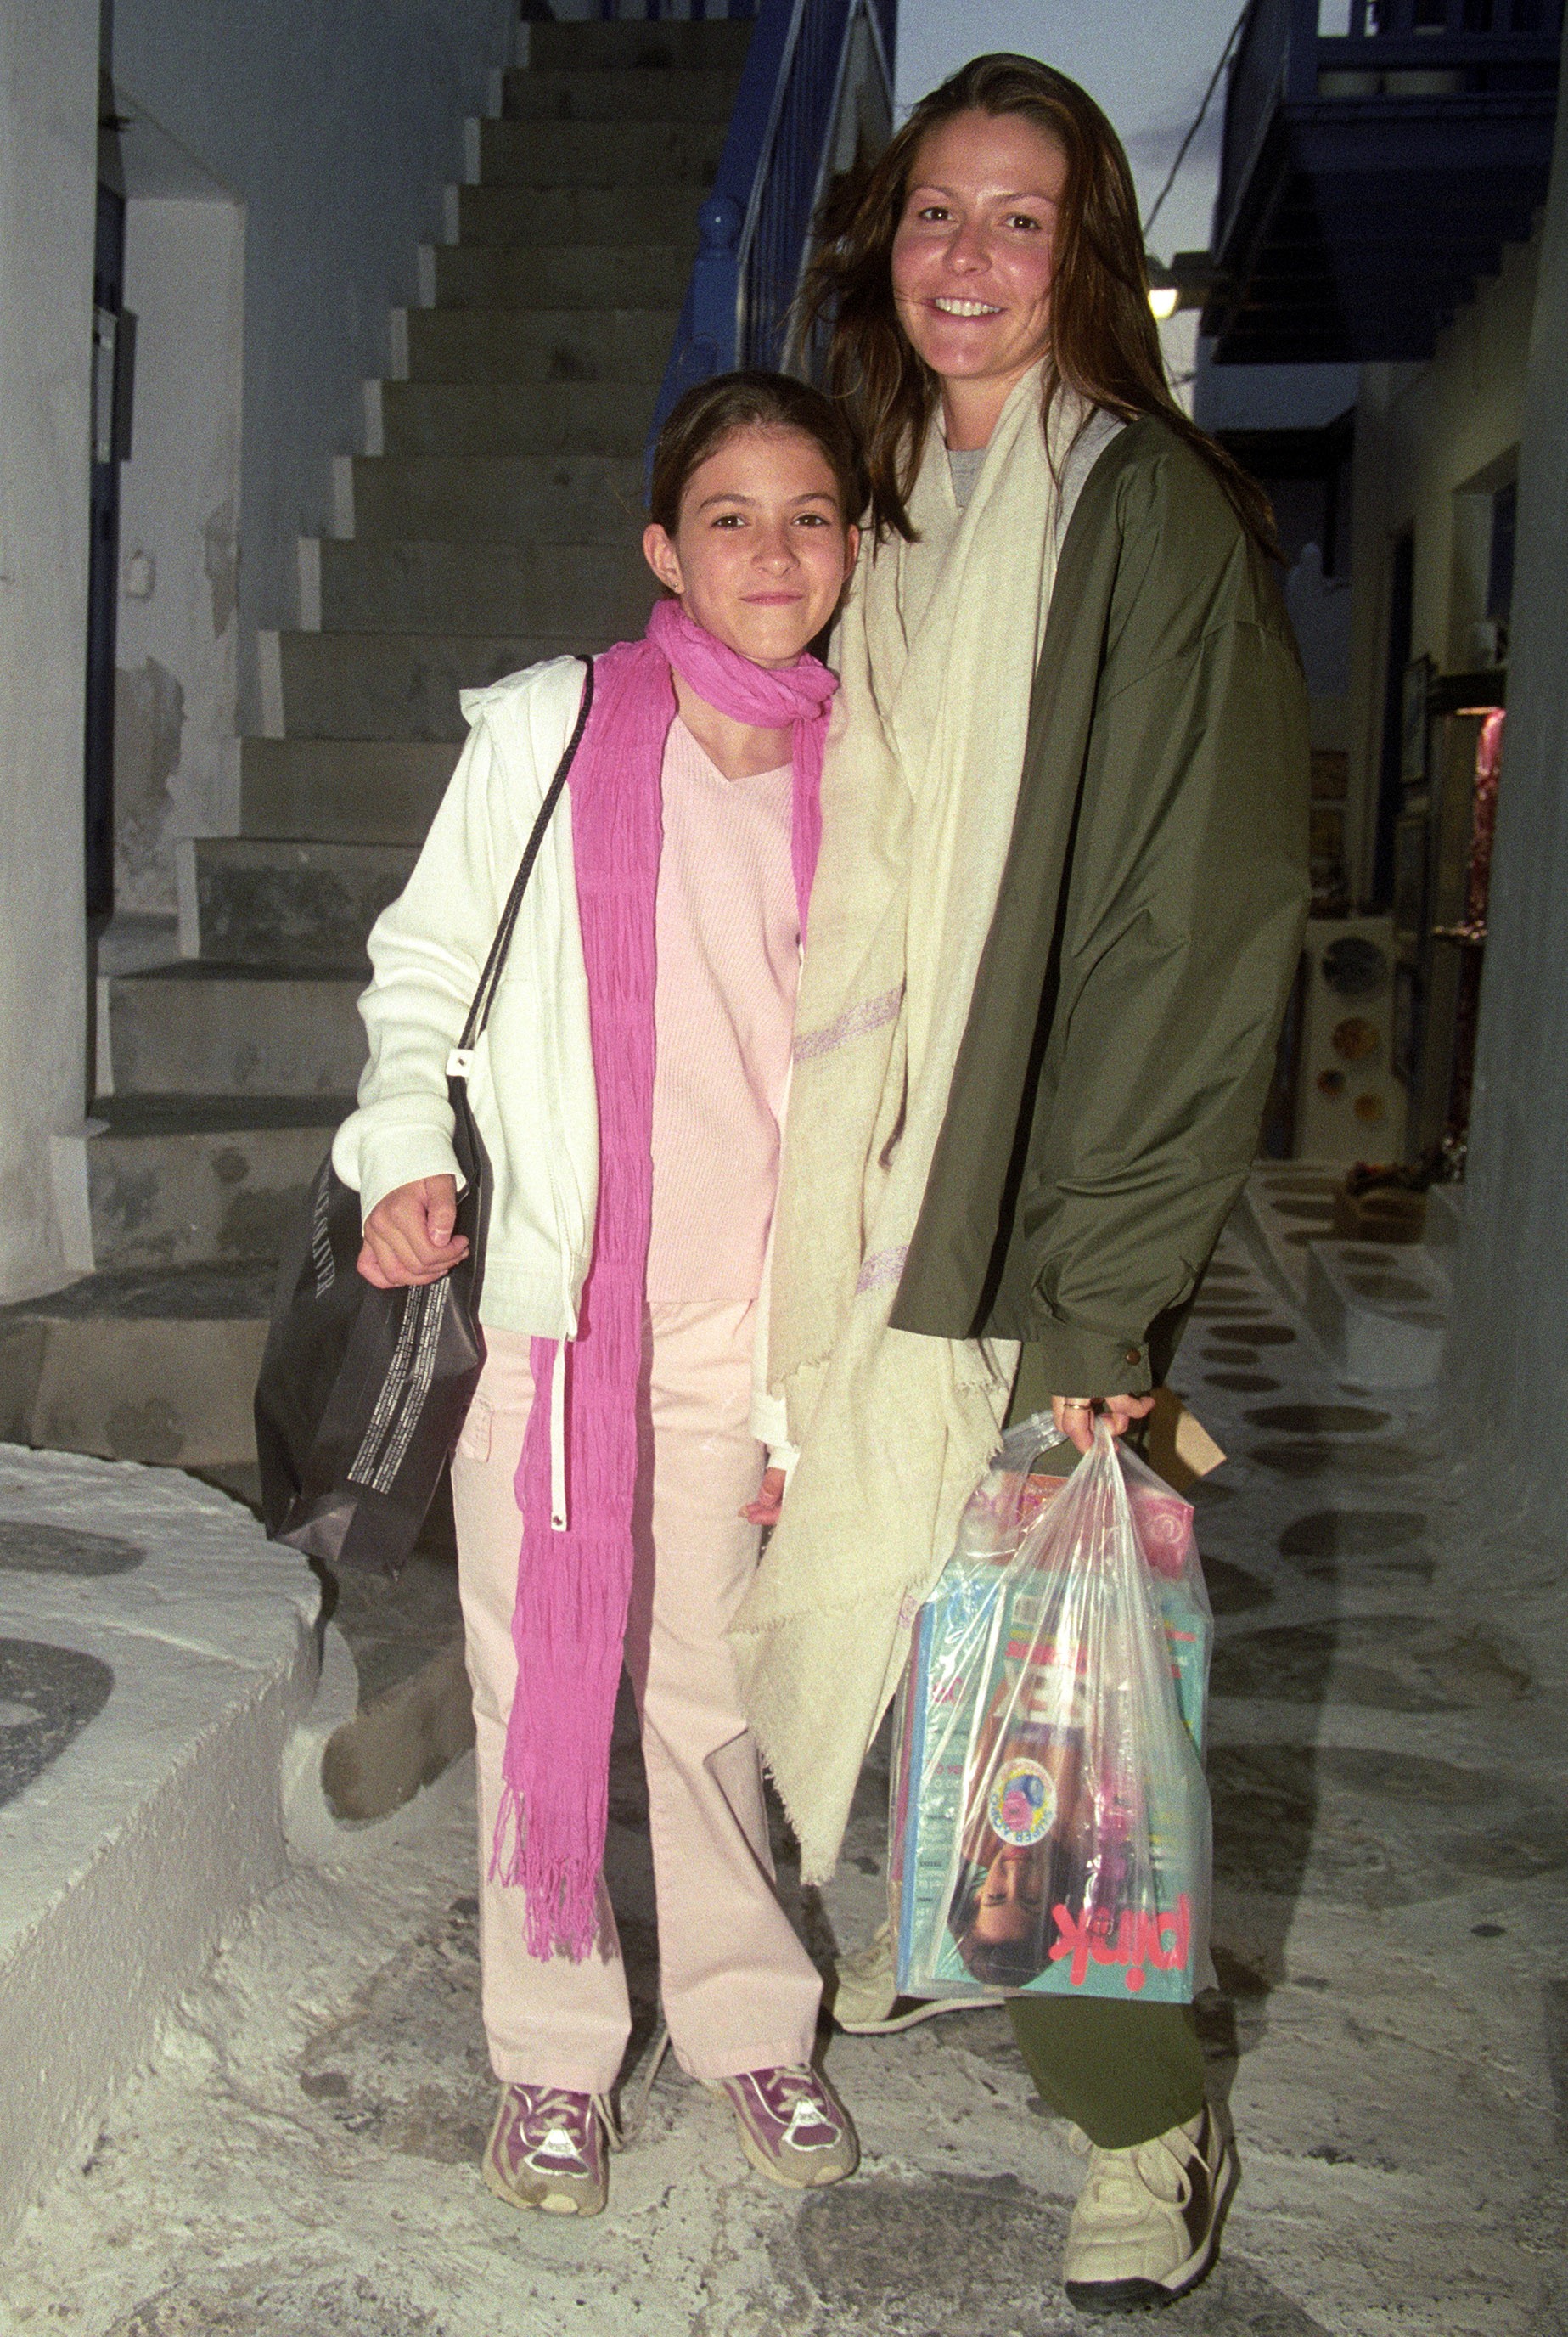 To jacket της Τζένης Μπαλατσινού από το 2000 είναι στυλάτο και 20 χρόνια μετά